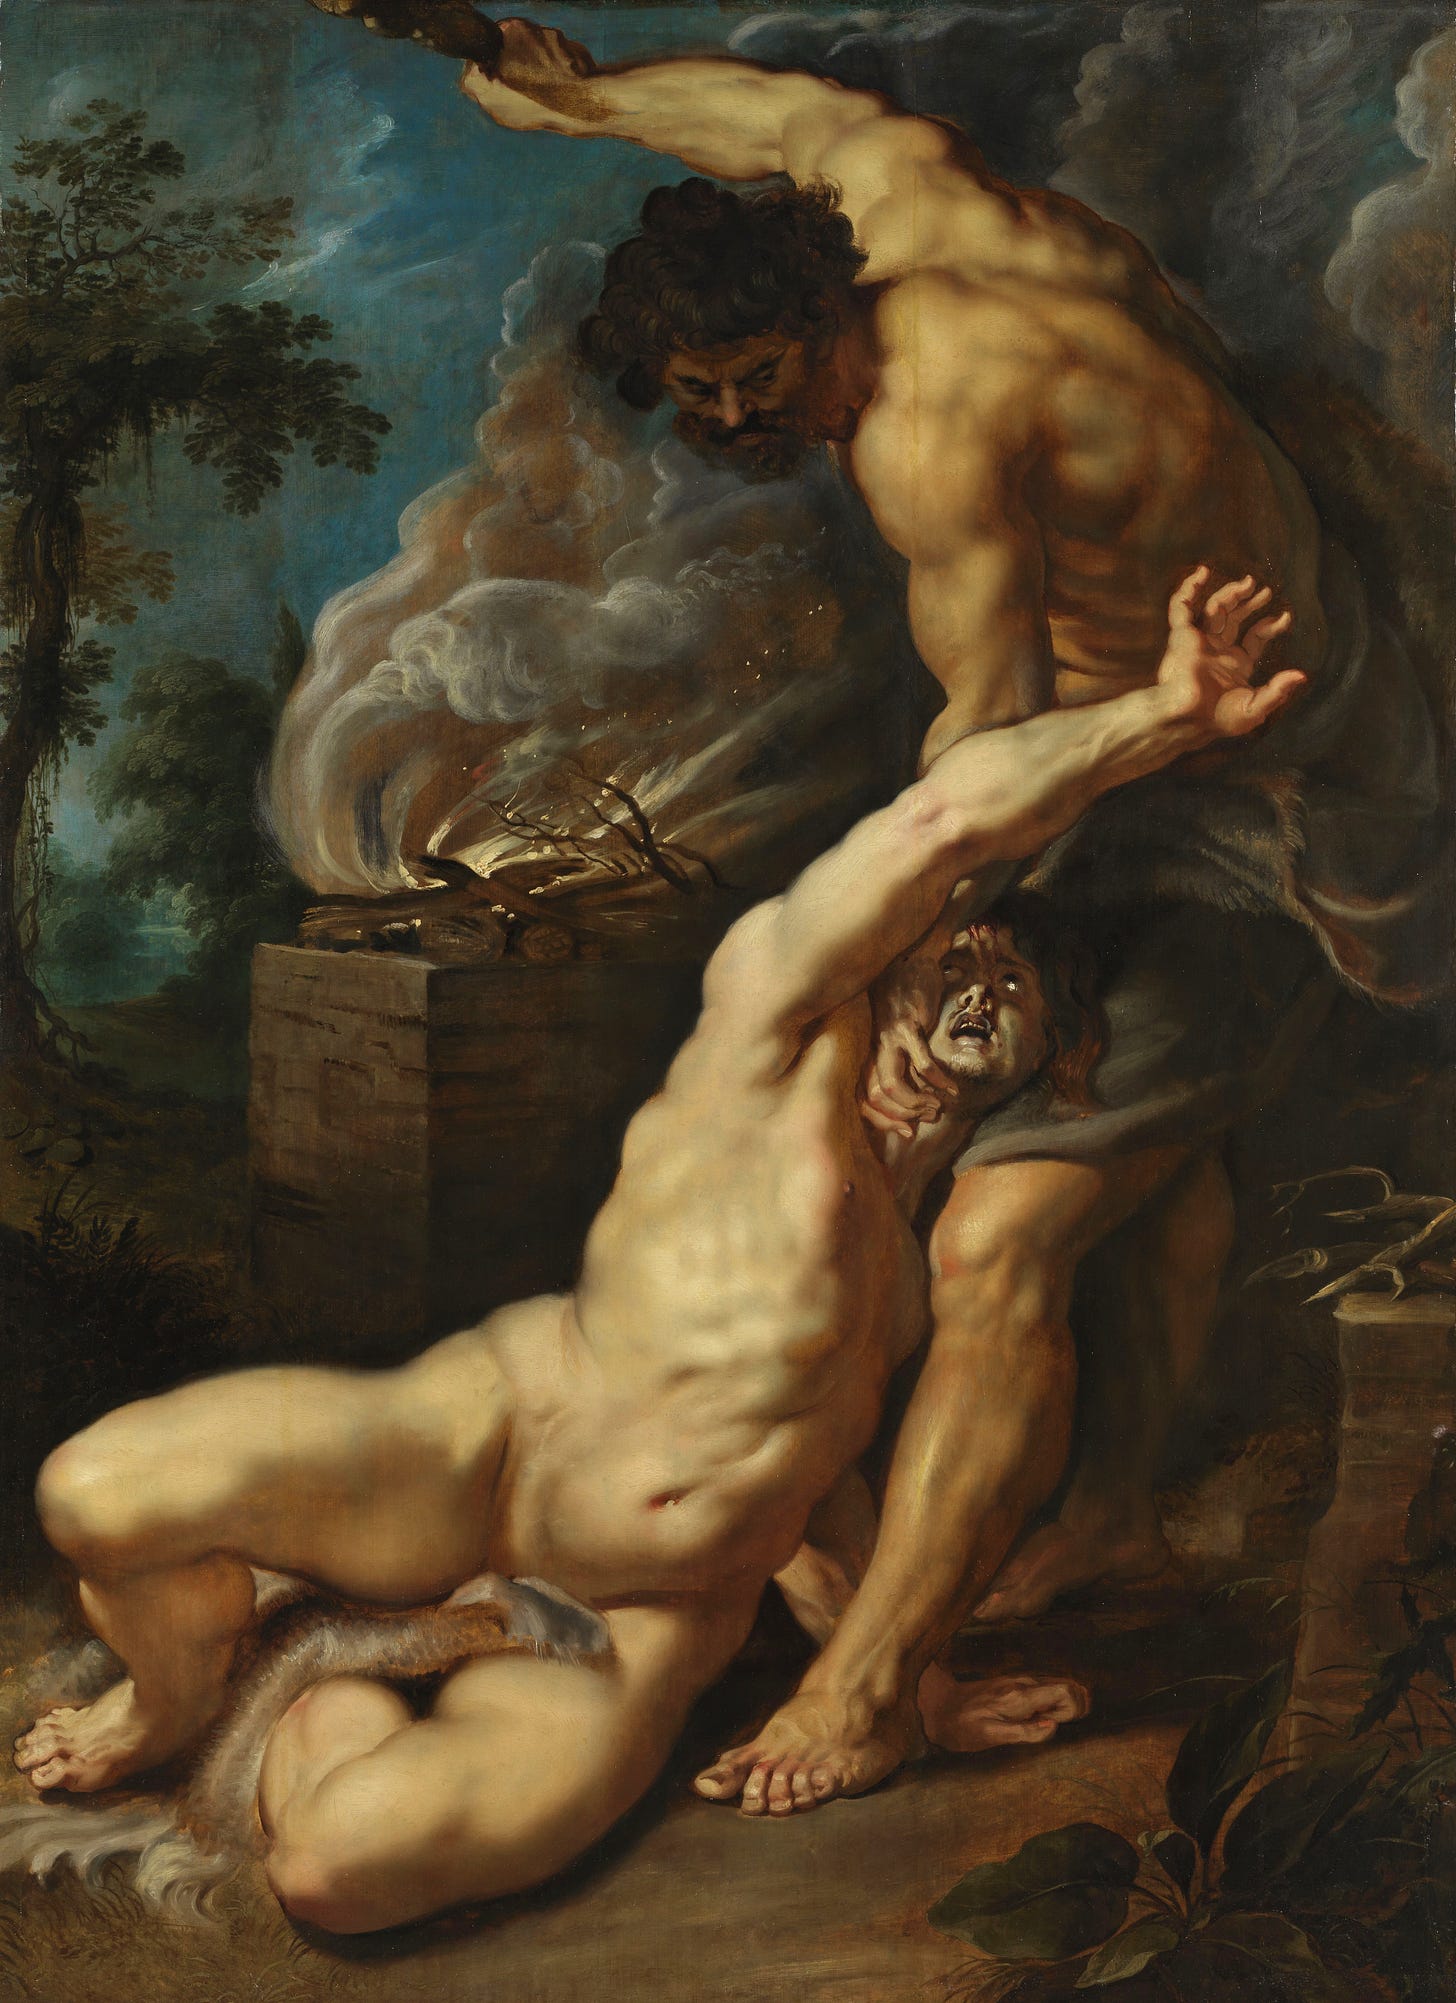 Cain slaying Abel by Peter Paul Rubens, c. 1600